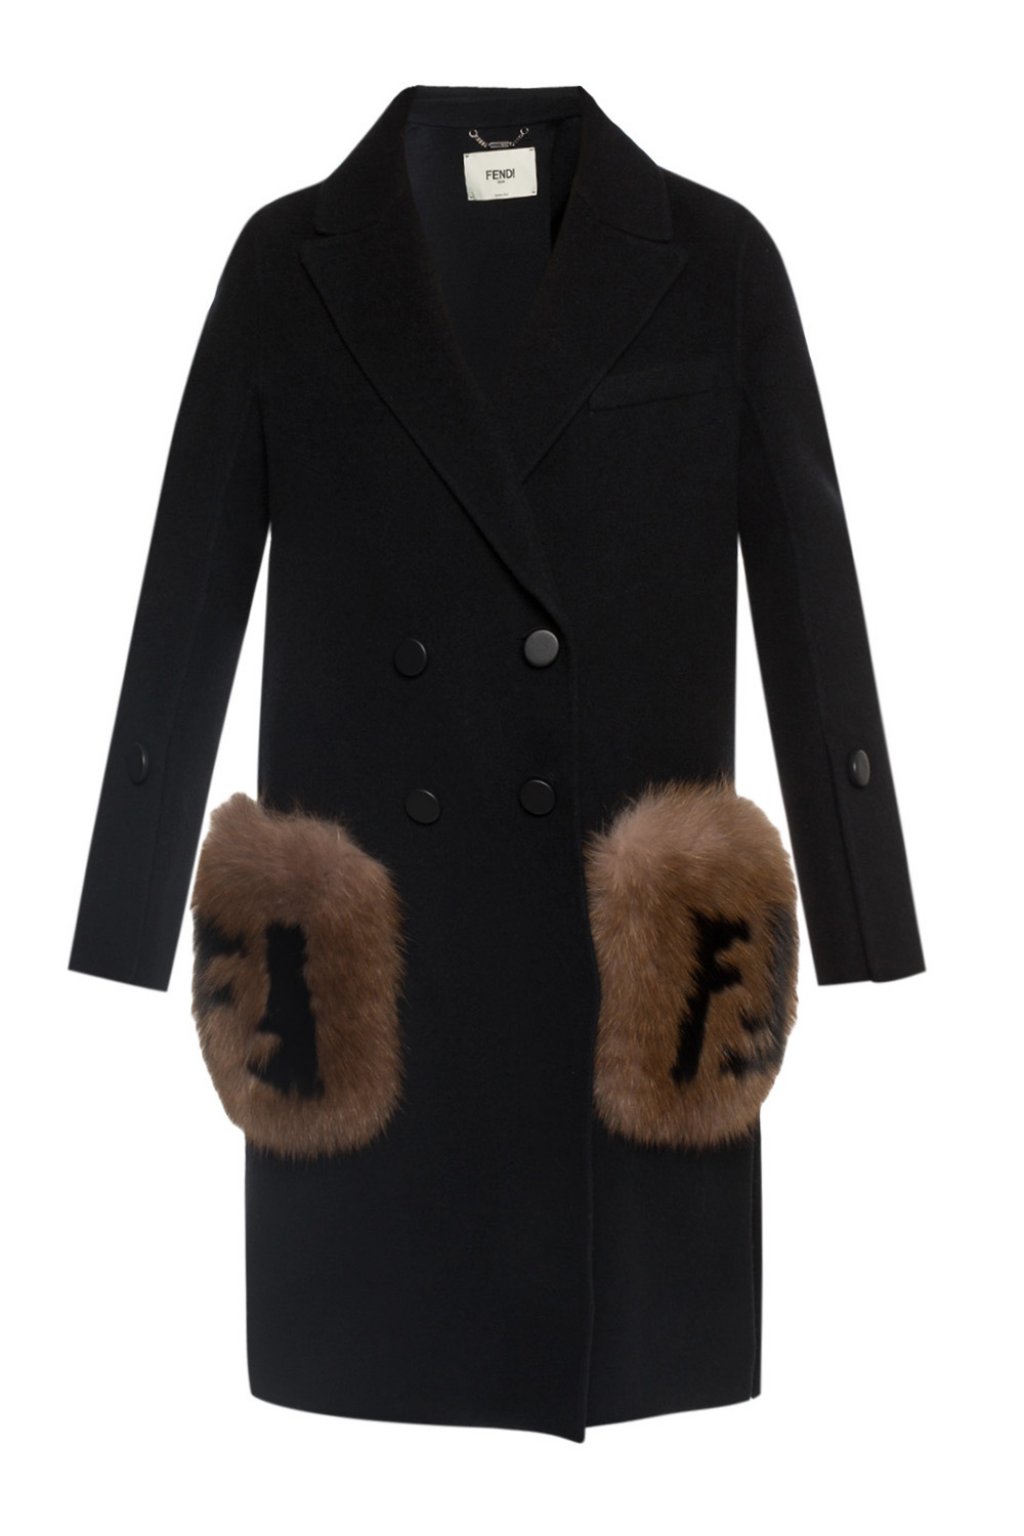 Fendi Wool Coat Shop, 53% OFF | www.pegasusaerogroup.com